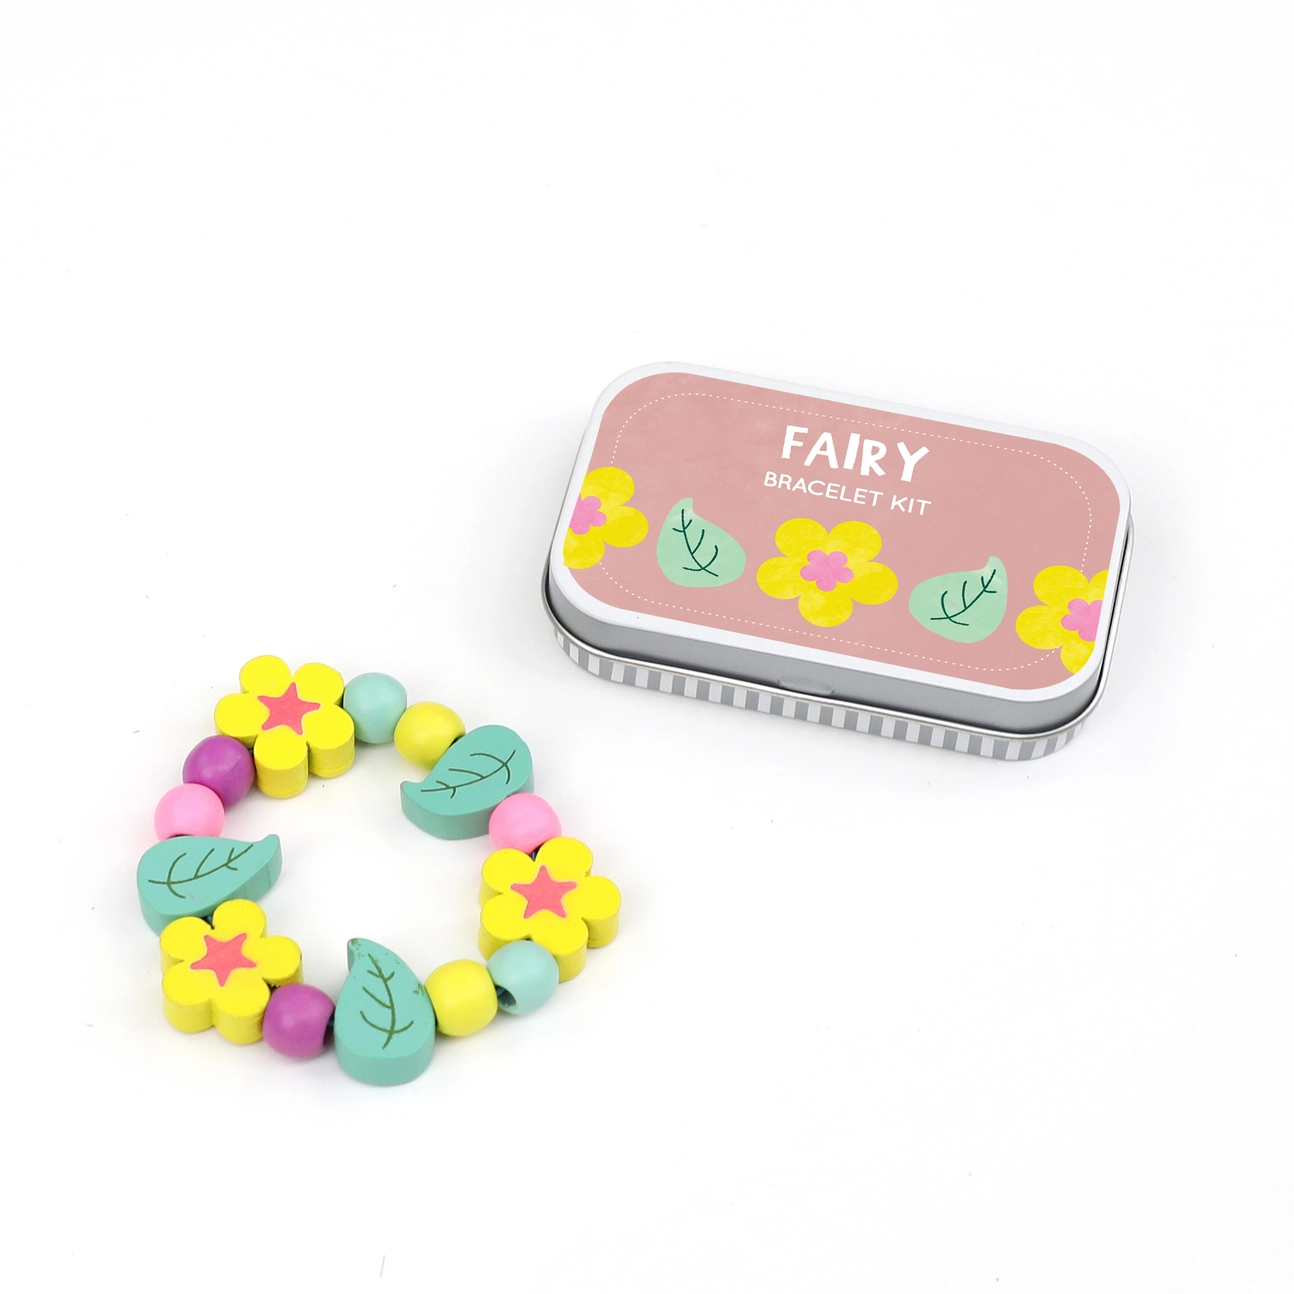 Cotton Twist - Fairy Bracelet Gift Kit